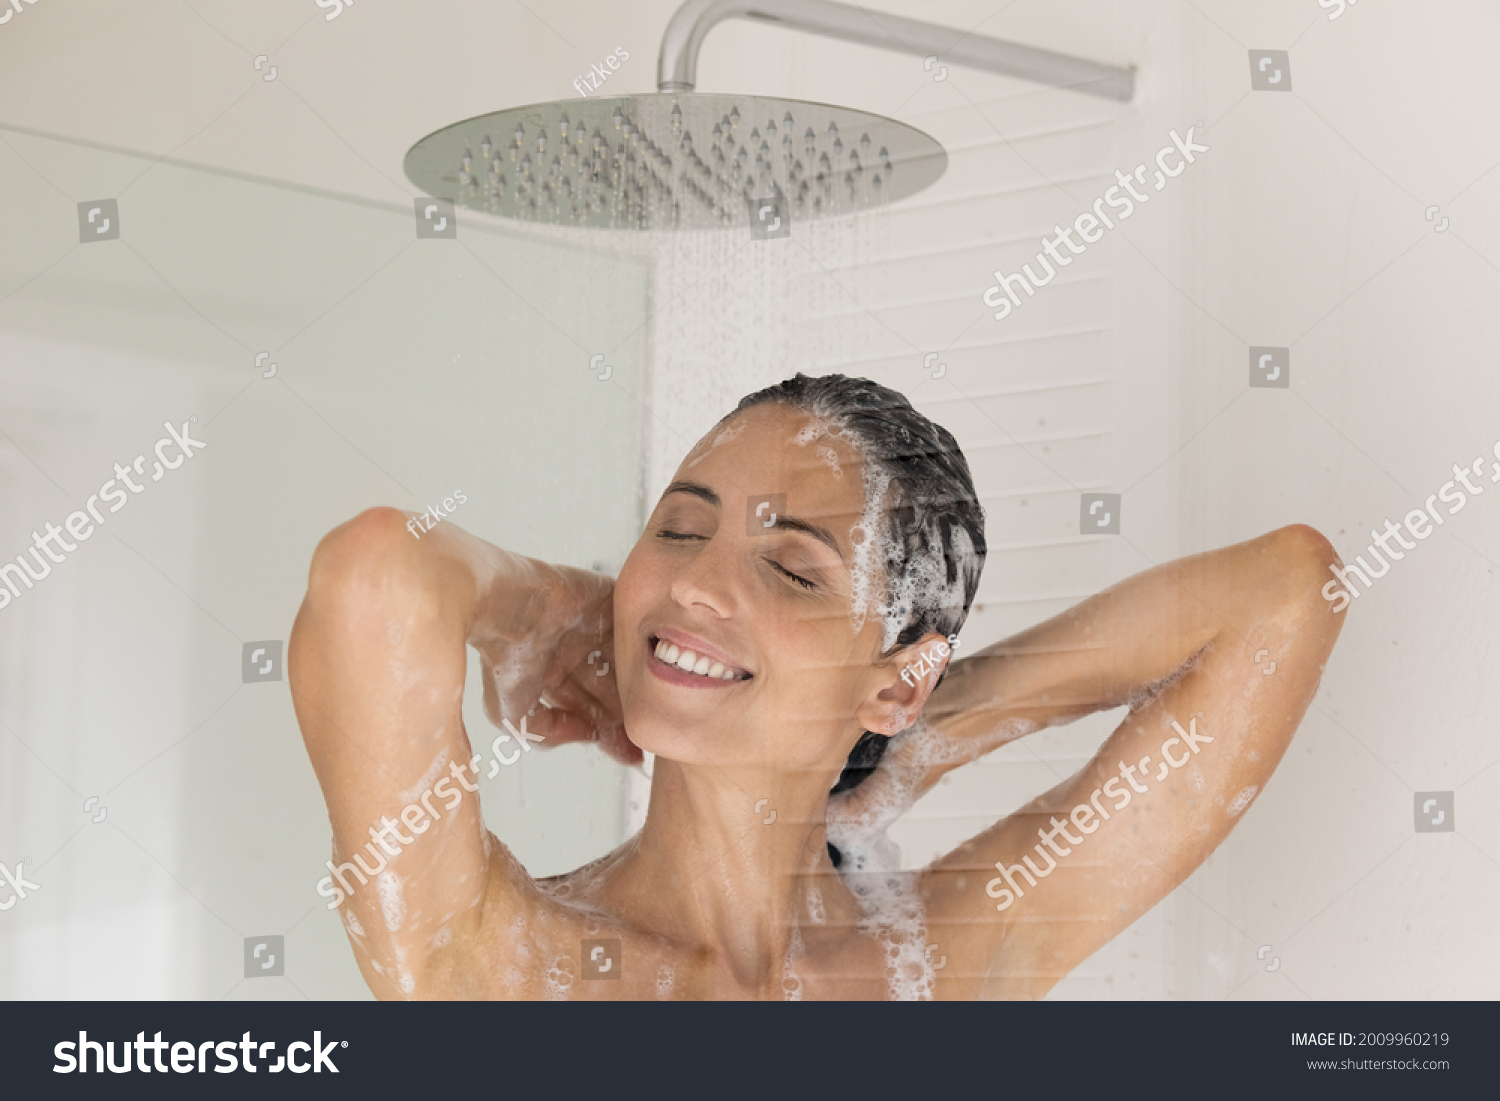 Latinas In Shower